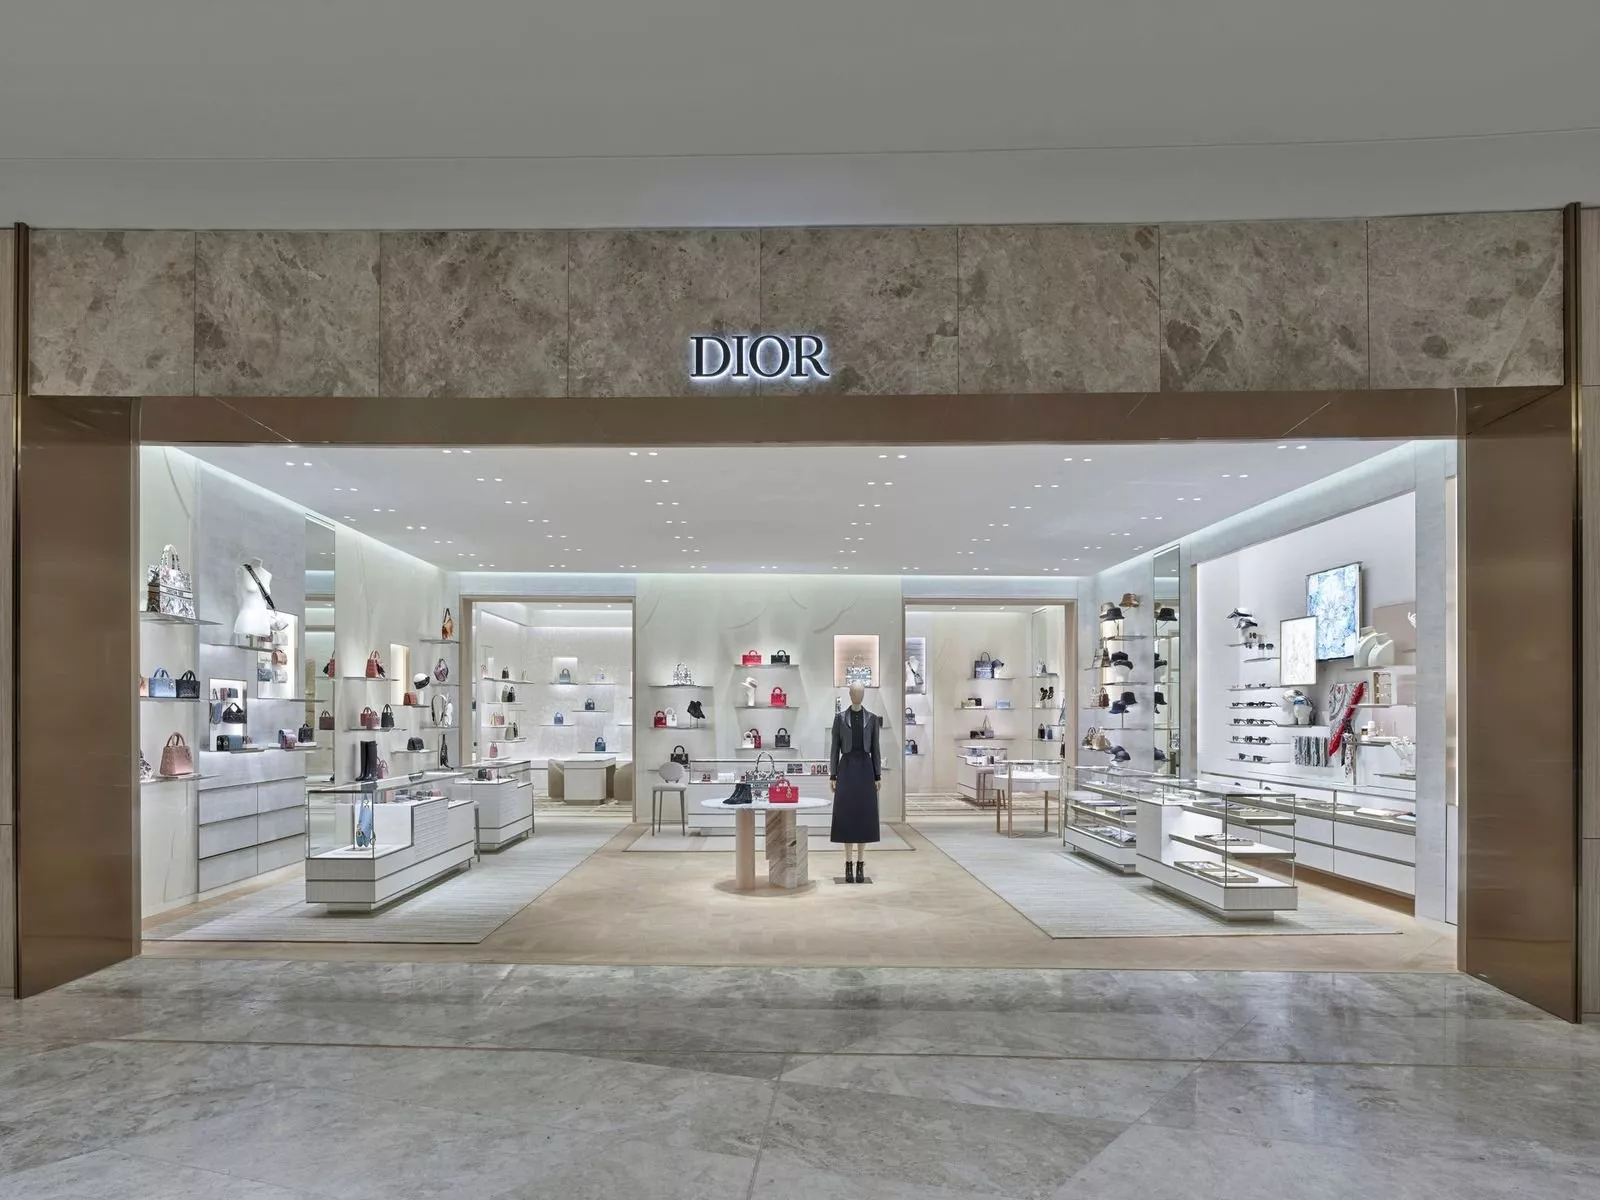 Dior تكشف عن سلسلة من متاجرها الدائمة والمؤقّتة في قلب الدوحة